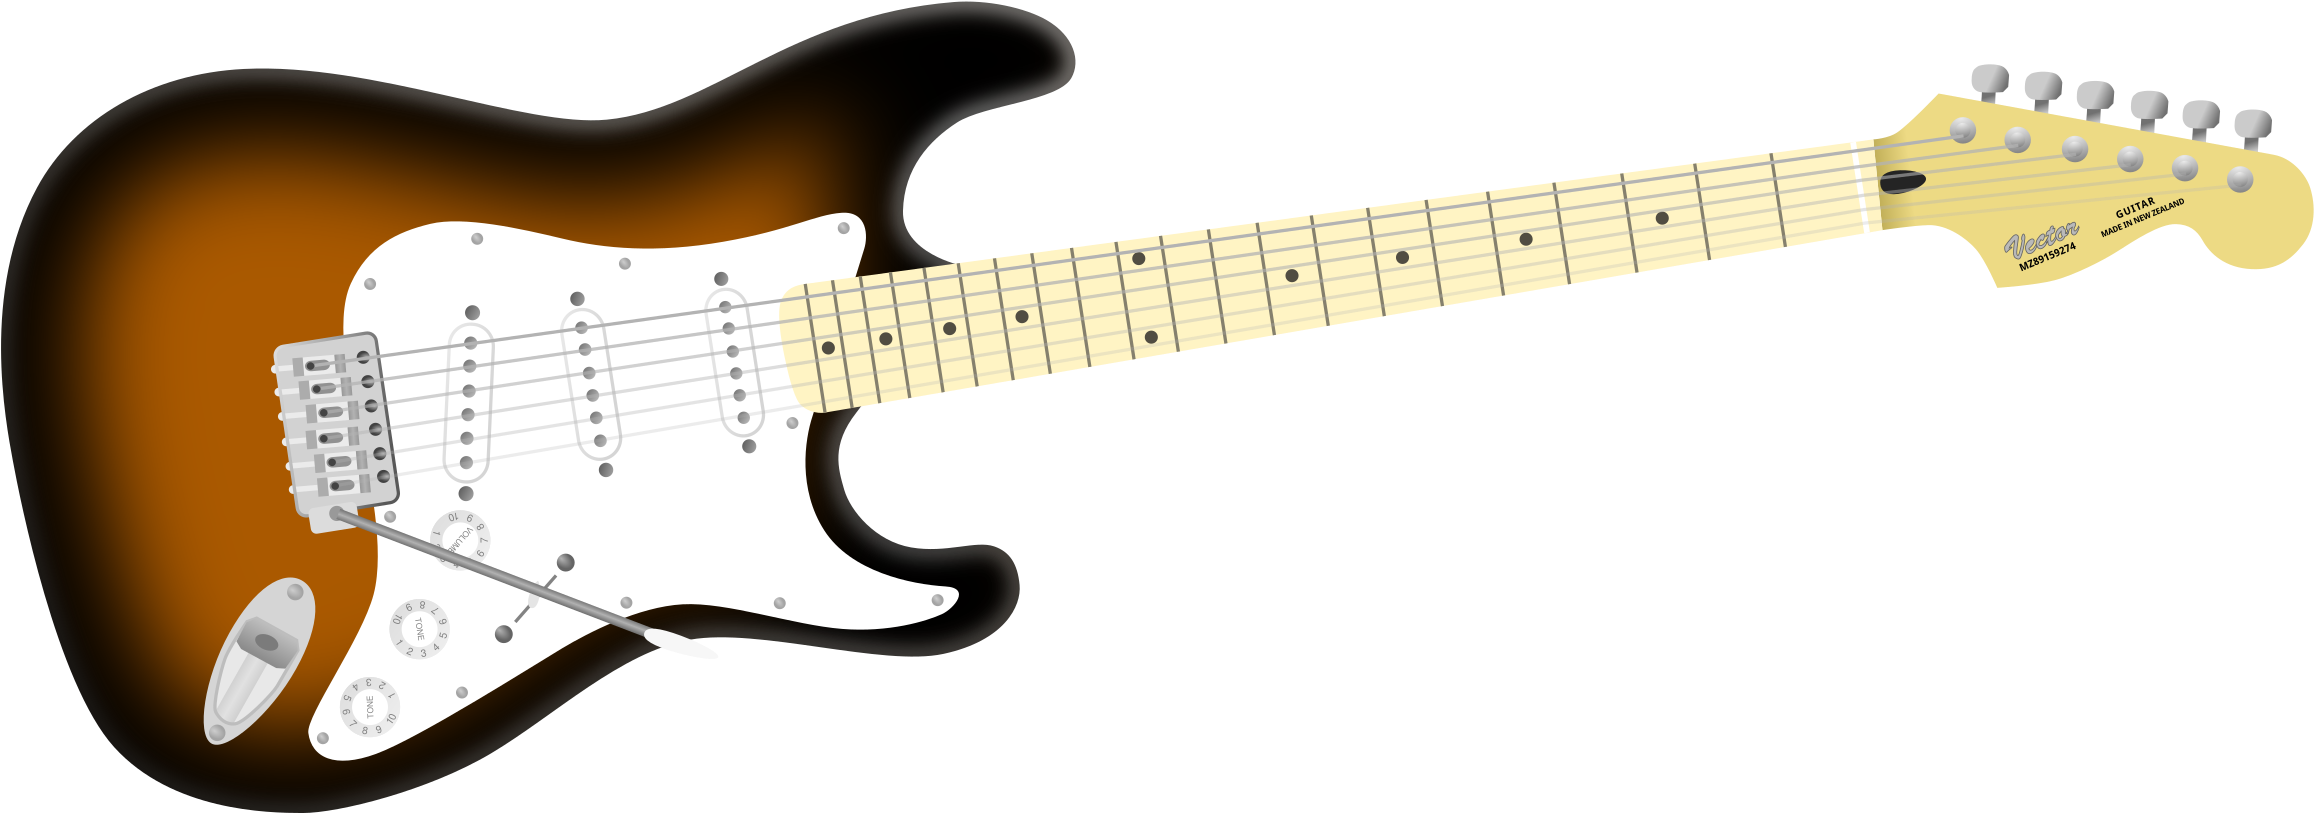 Electric Guitar - Fender Stratocaster Mim Sunburst (2400x945)